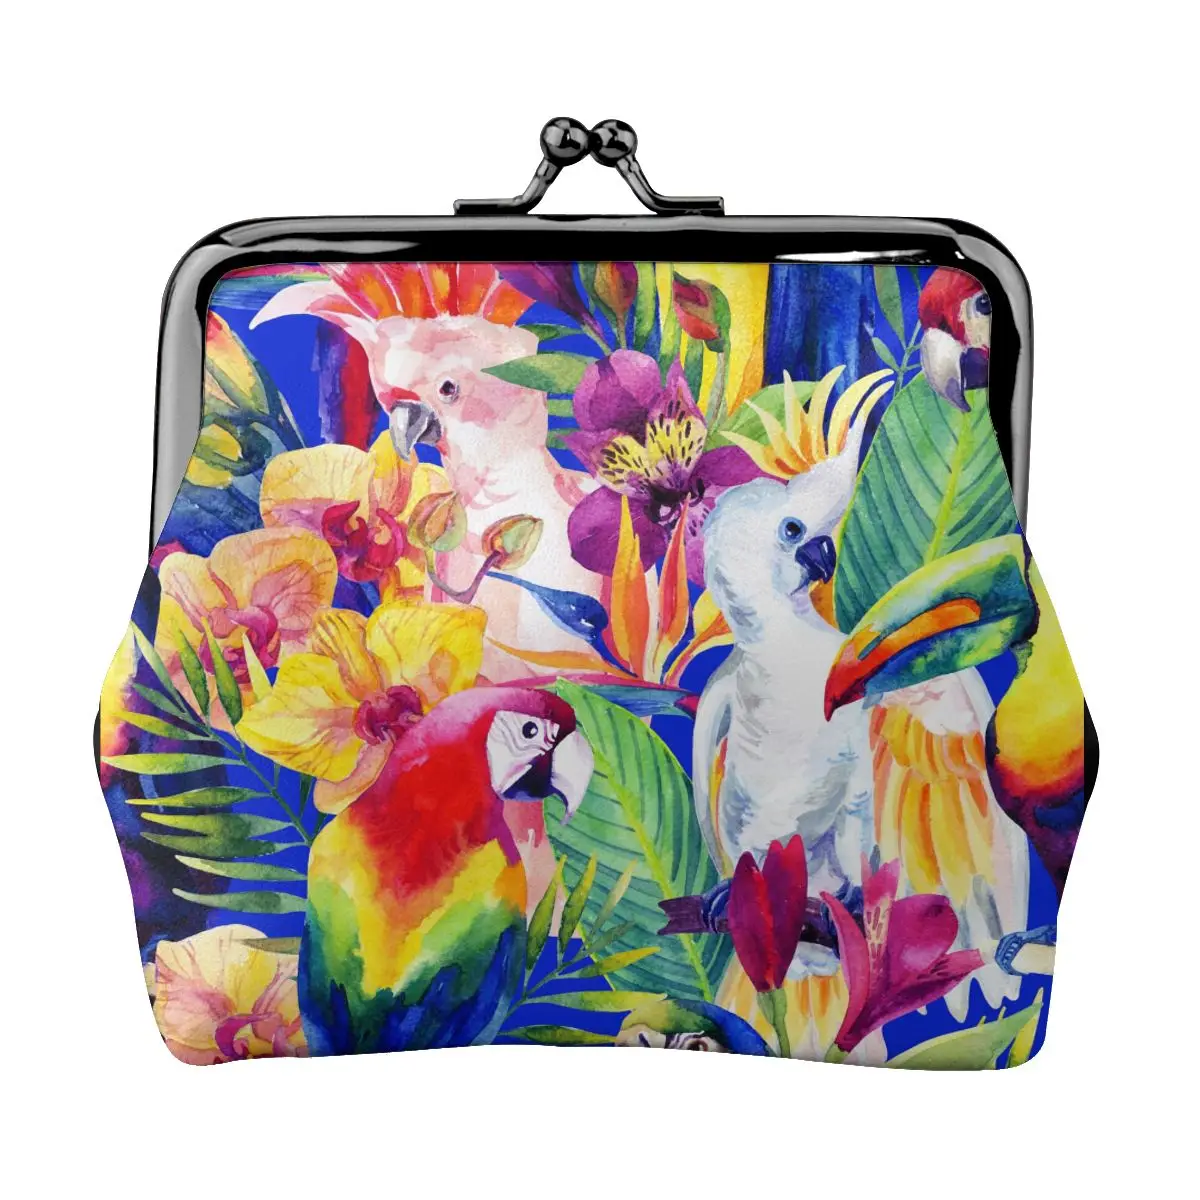 

Small Wallet Women Mini Printing Coin Purses Hasp Cash Card Handbags Clutch Money Change Bag Watercolor Parrots Tropical Flowers